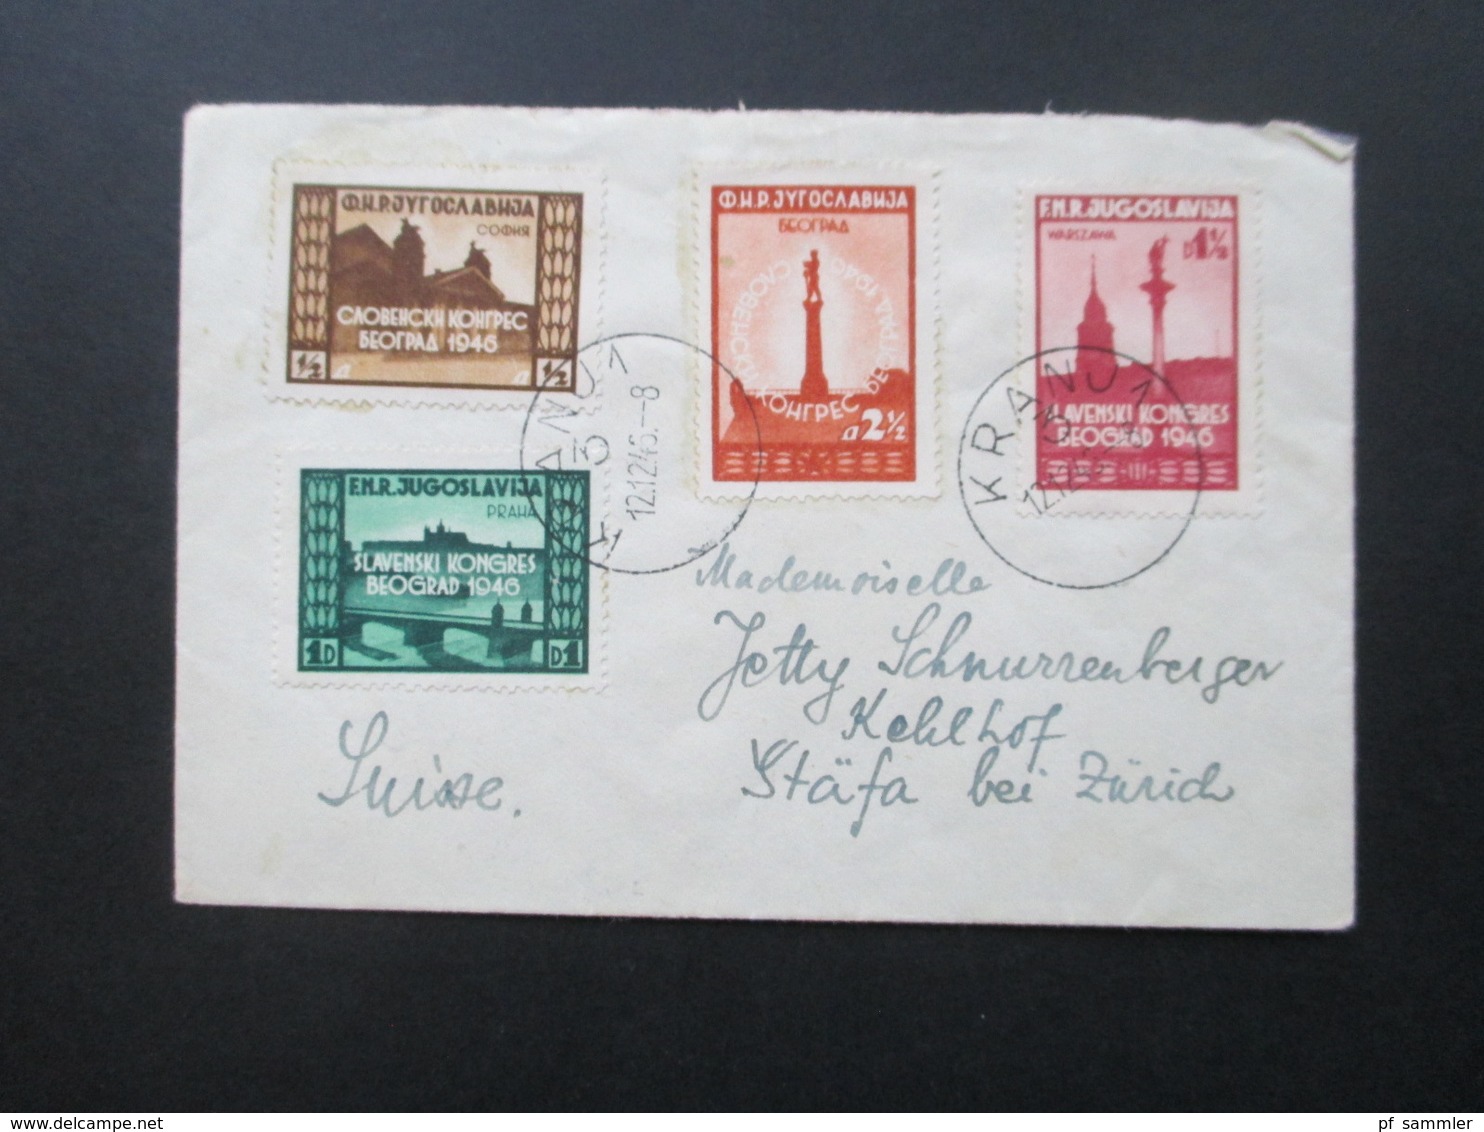 Jugoslawien 1946 Panslawischer Kongreß Nr. 507 - 510 Bedarfsbrief In Die Schweiz! Stempel Kranj 1 12.12.1946 - Lettres & Documents